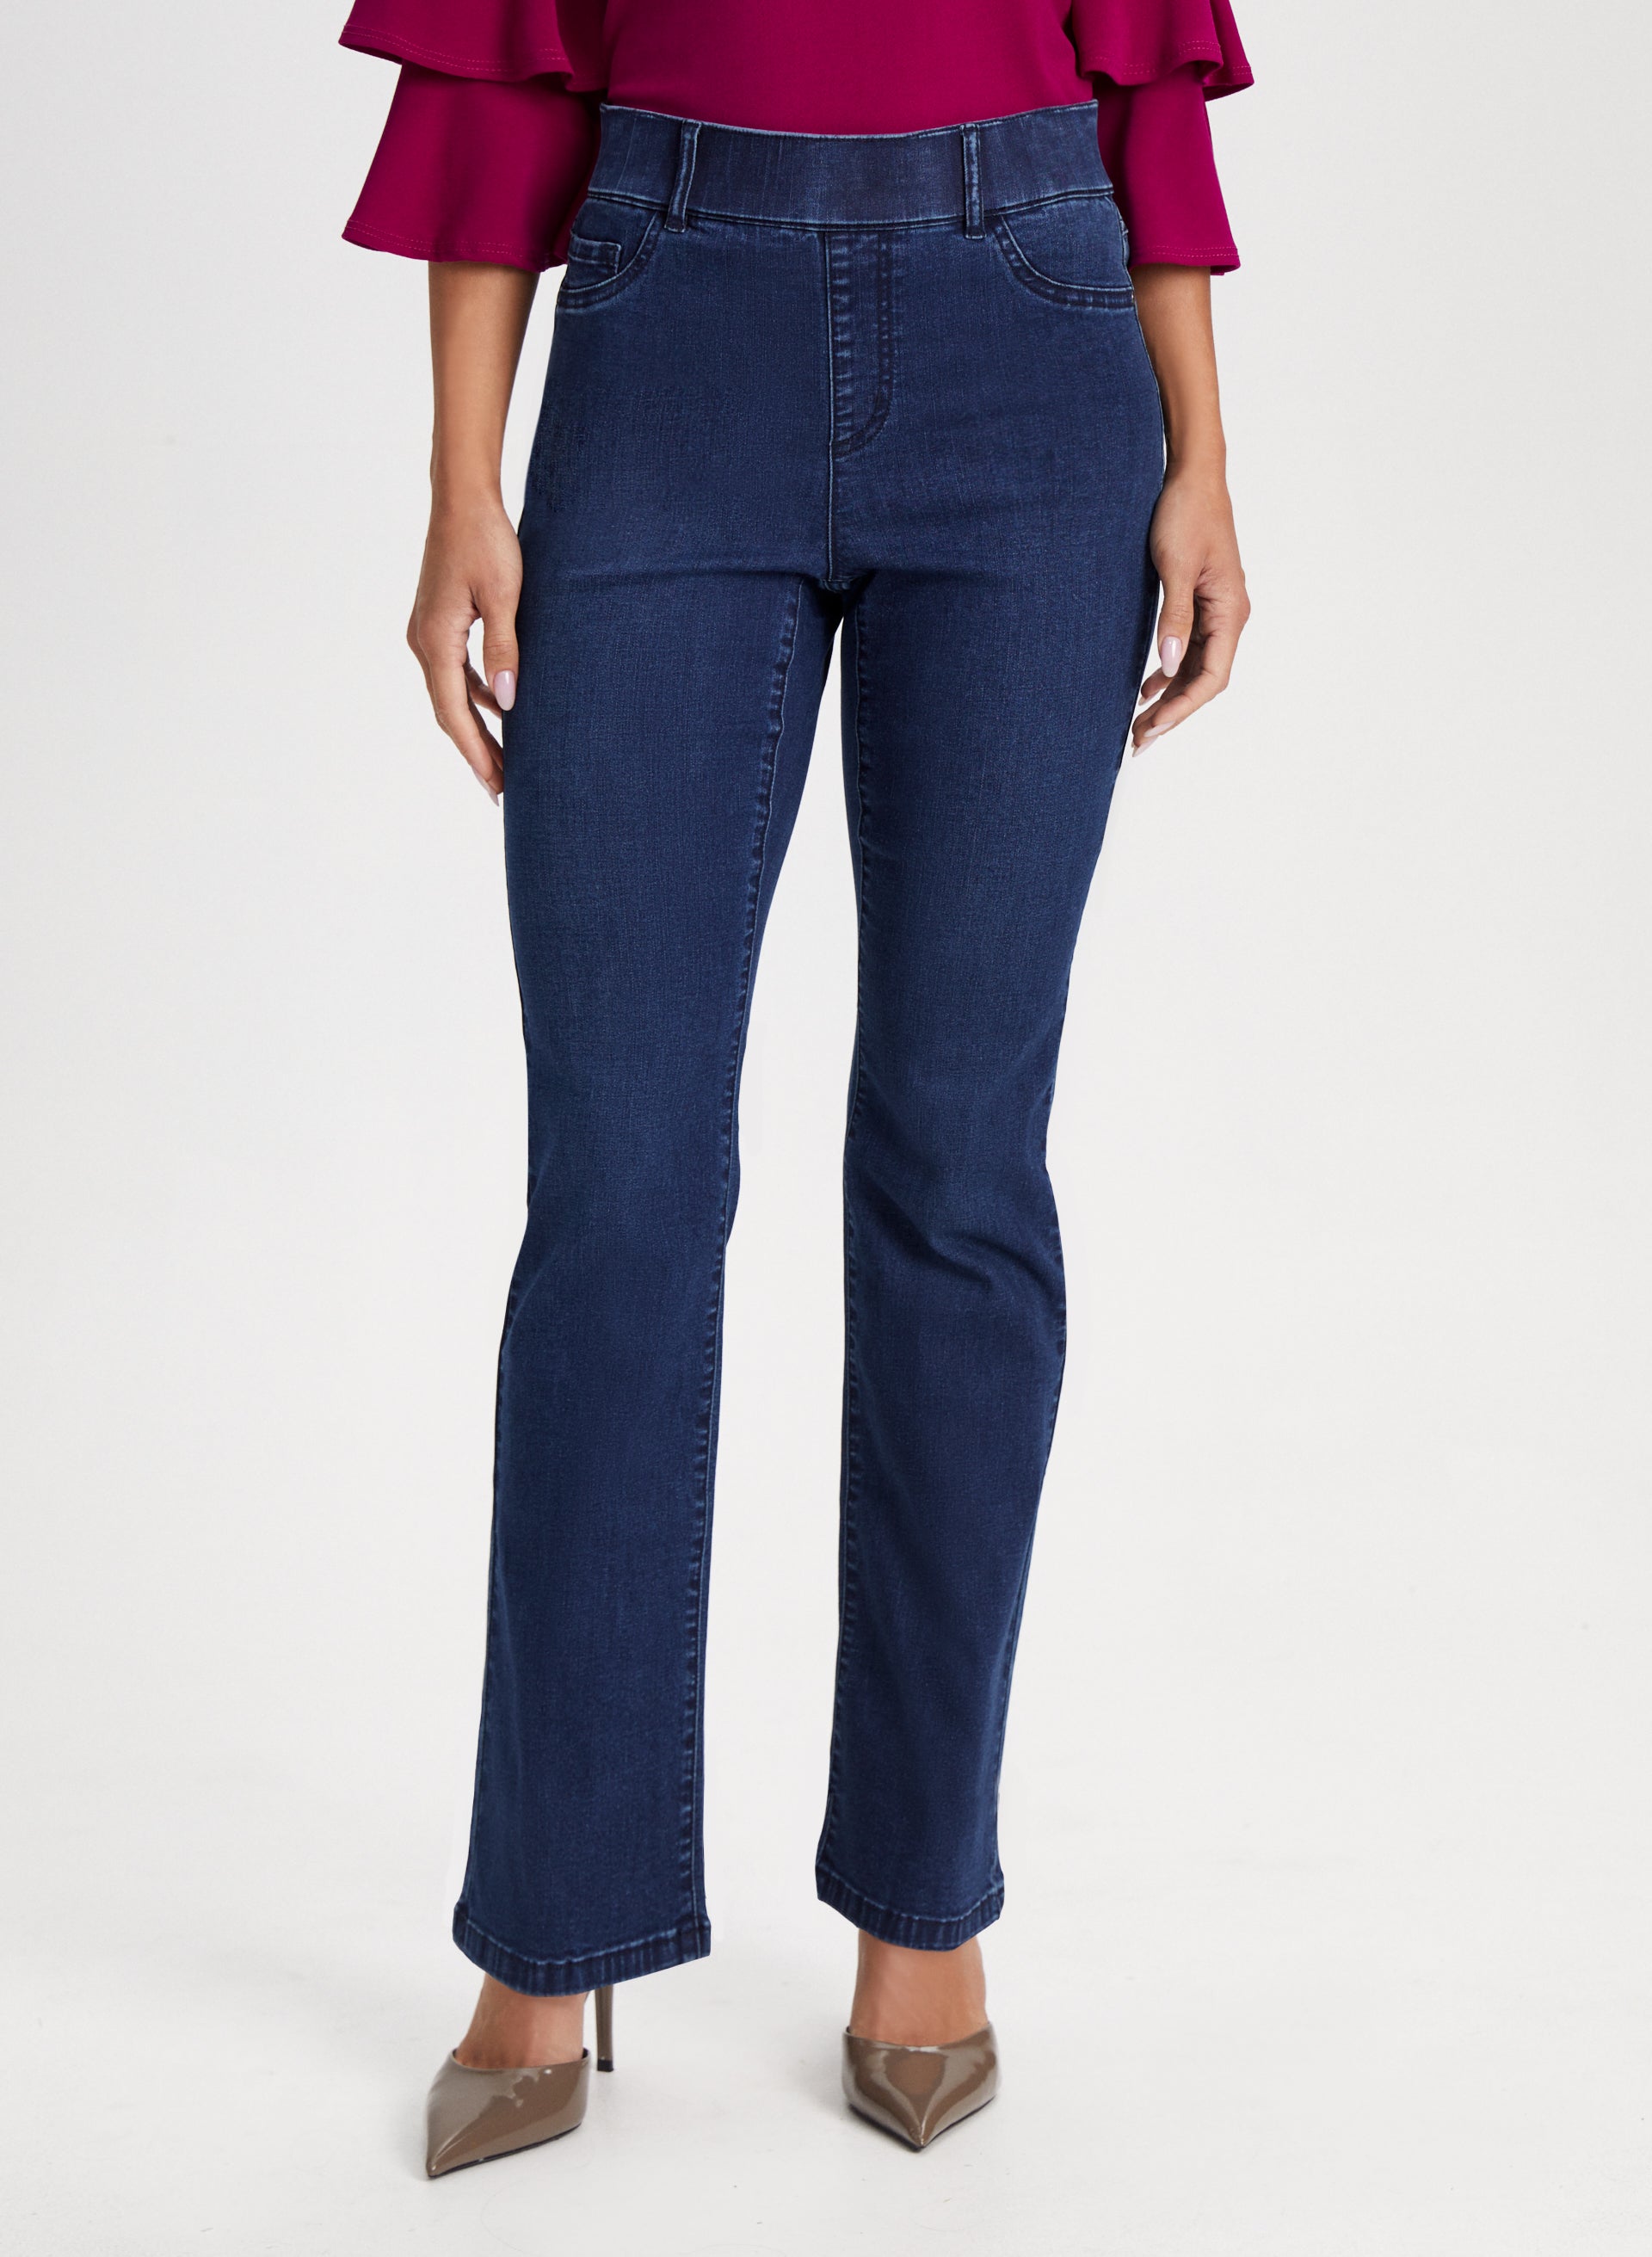 Blue Slant Pocket Bootcut Jeans *-Stretch Washed Versatile Denim Pants,  Women's Denim Clothing